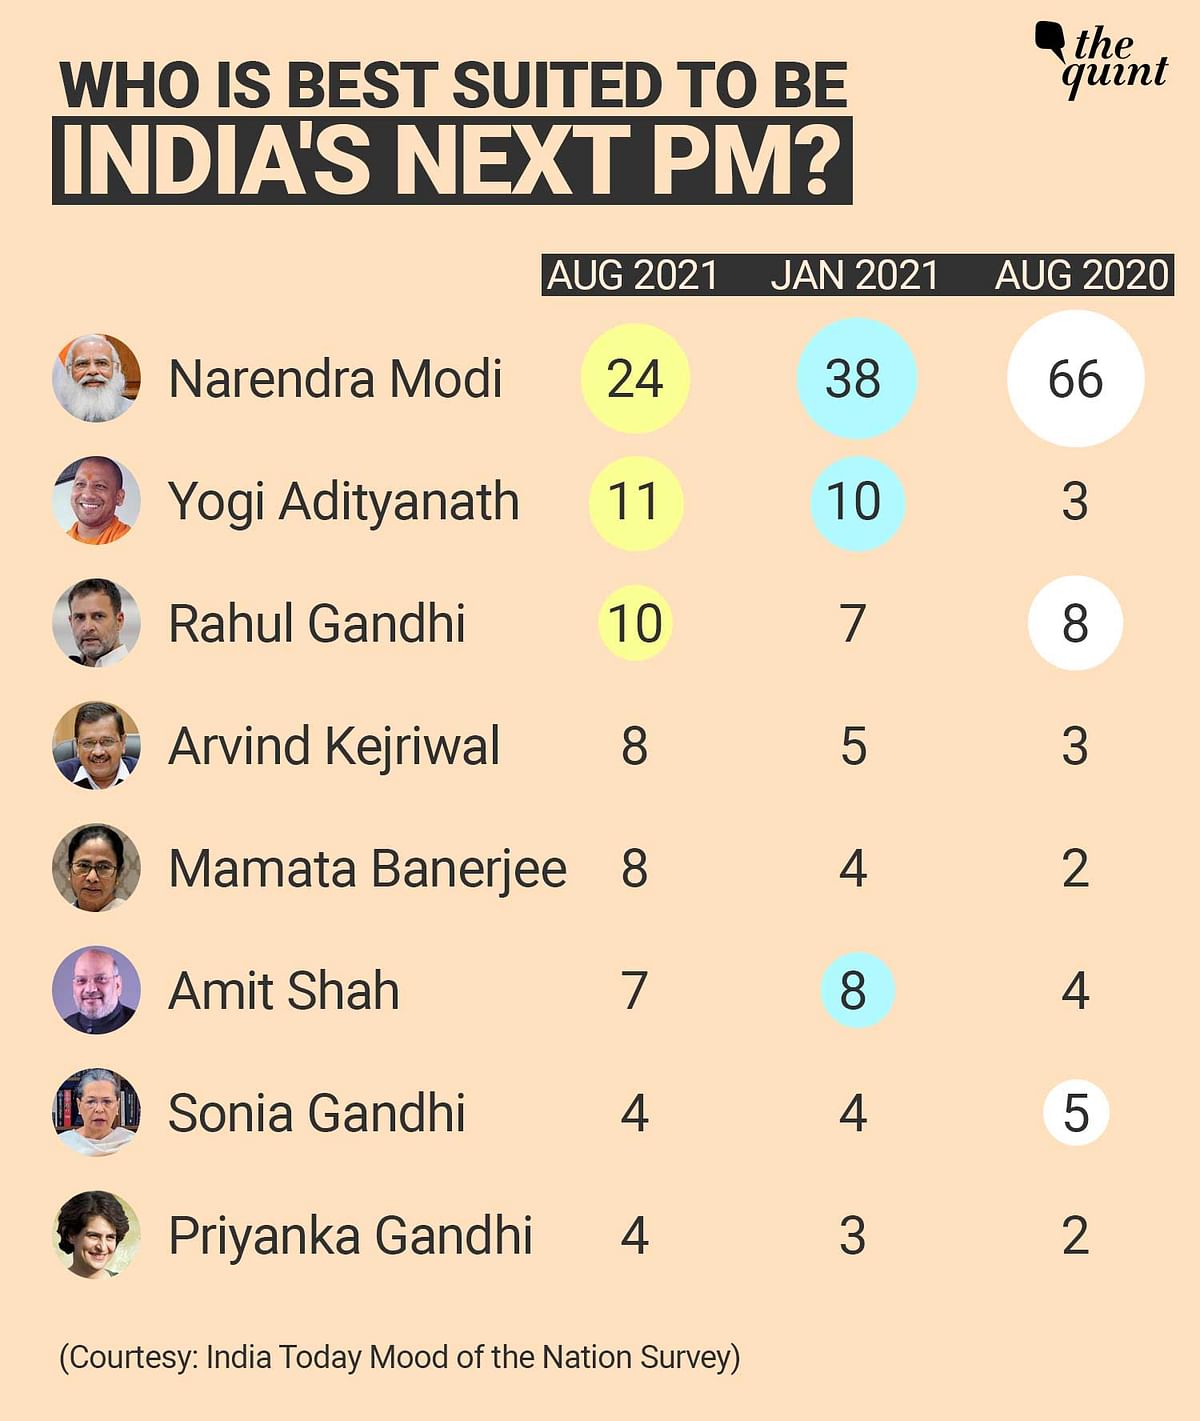 India Today Mood of the Nation Survey's Data on PM Modi & Yogi